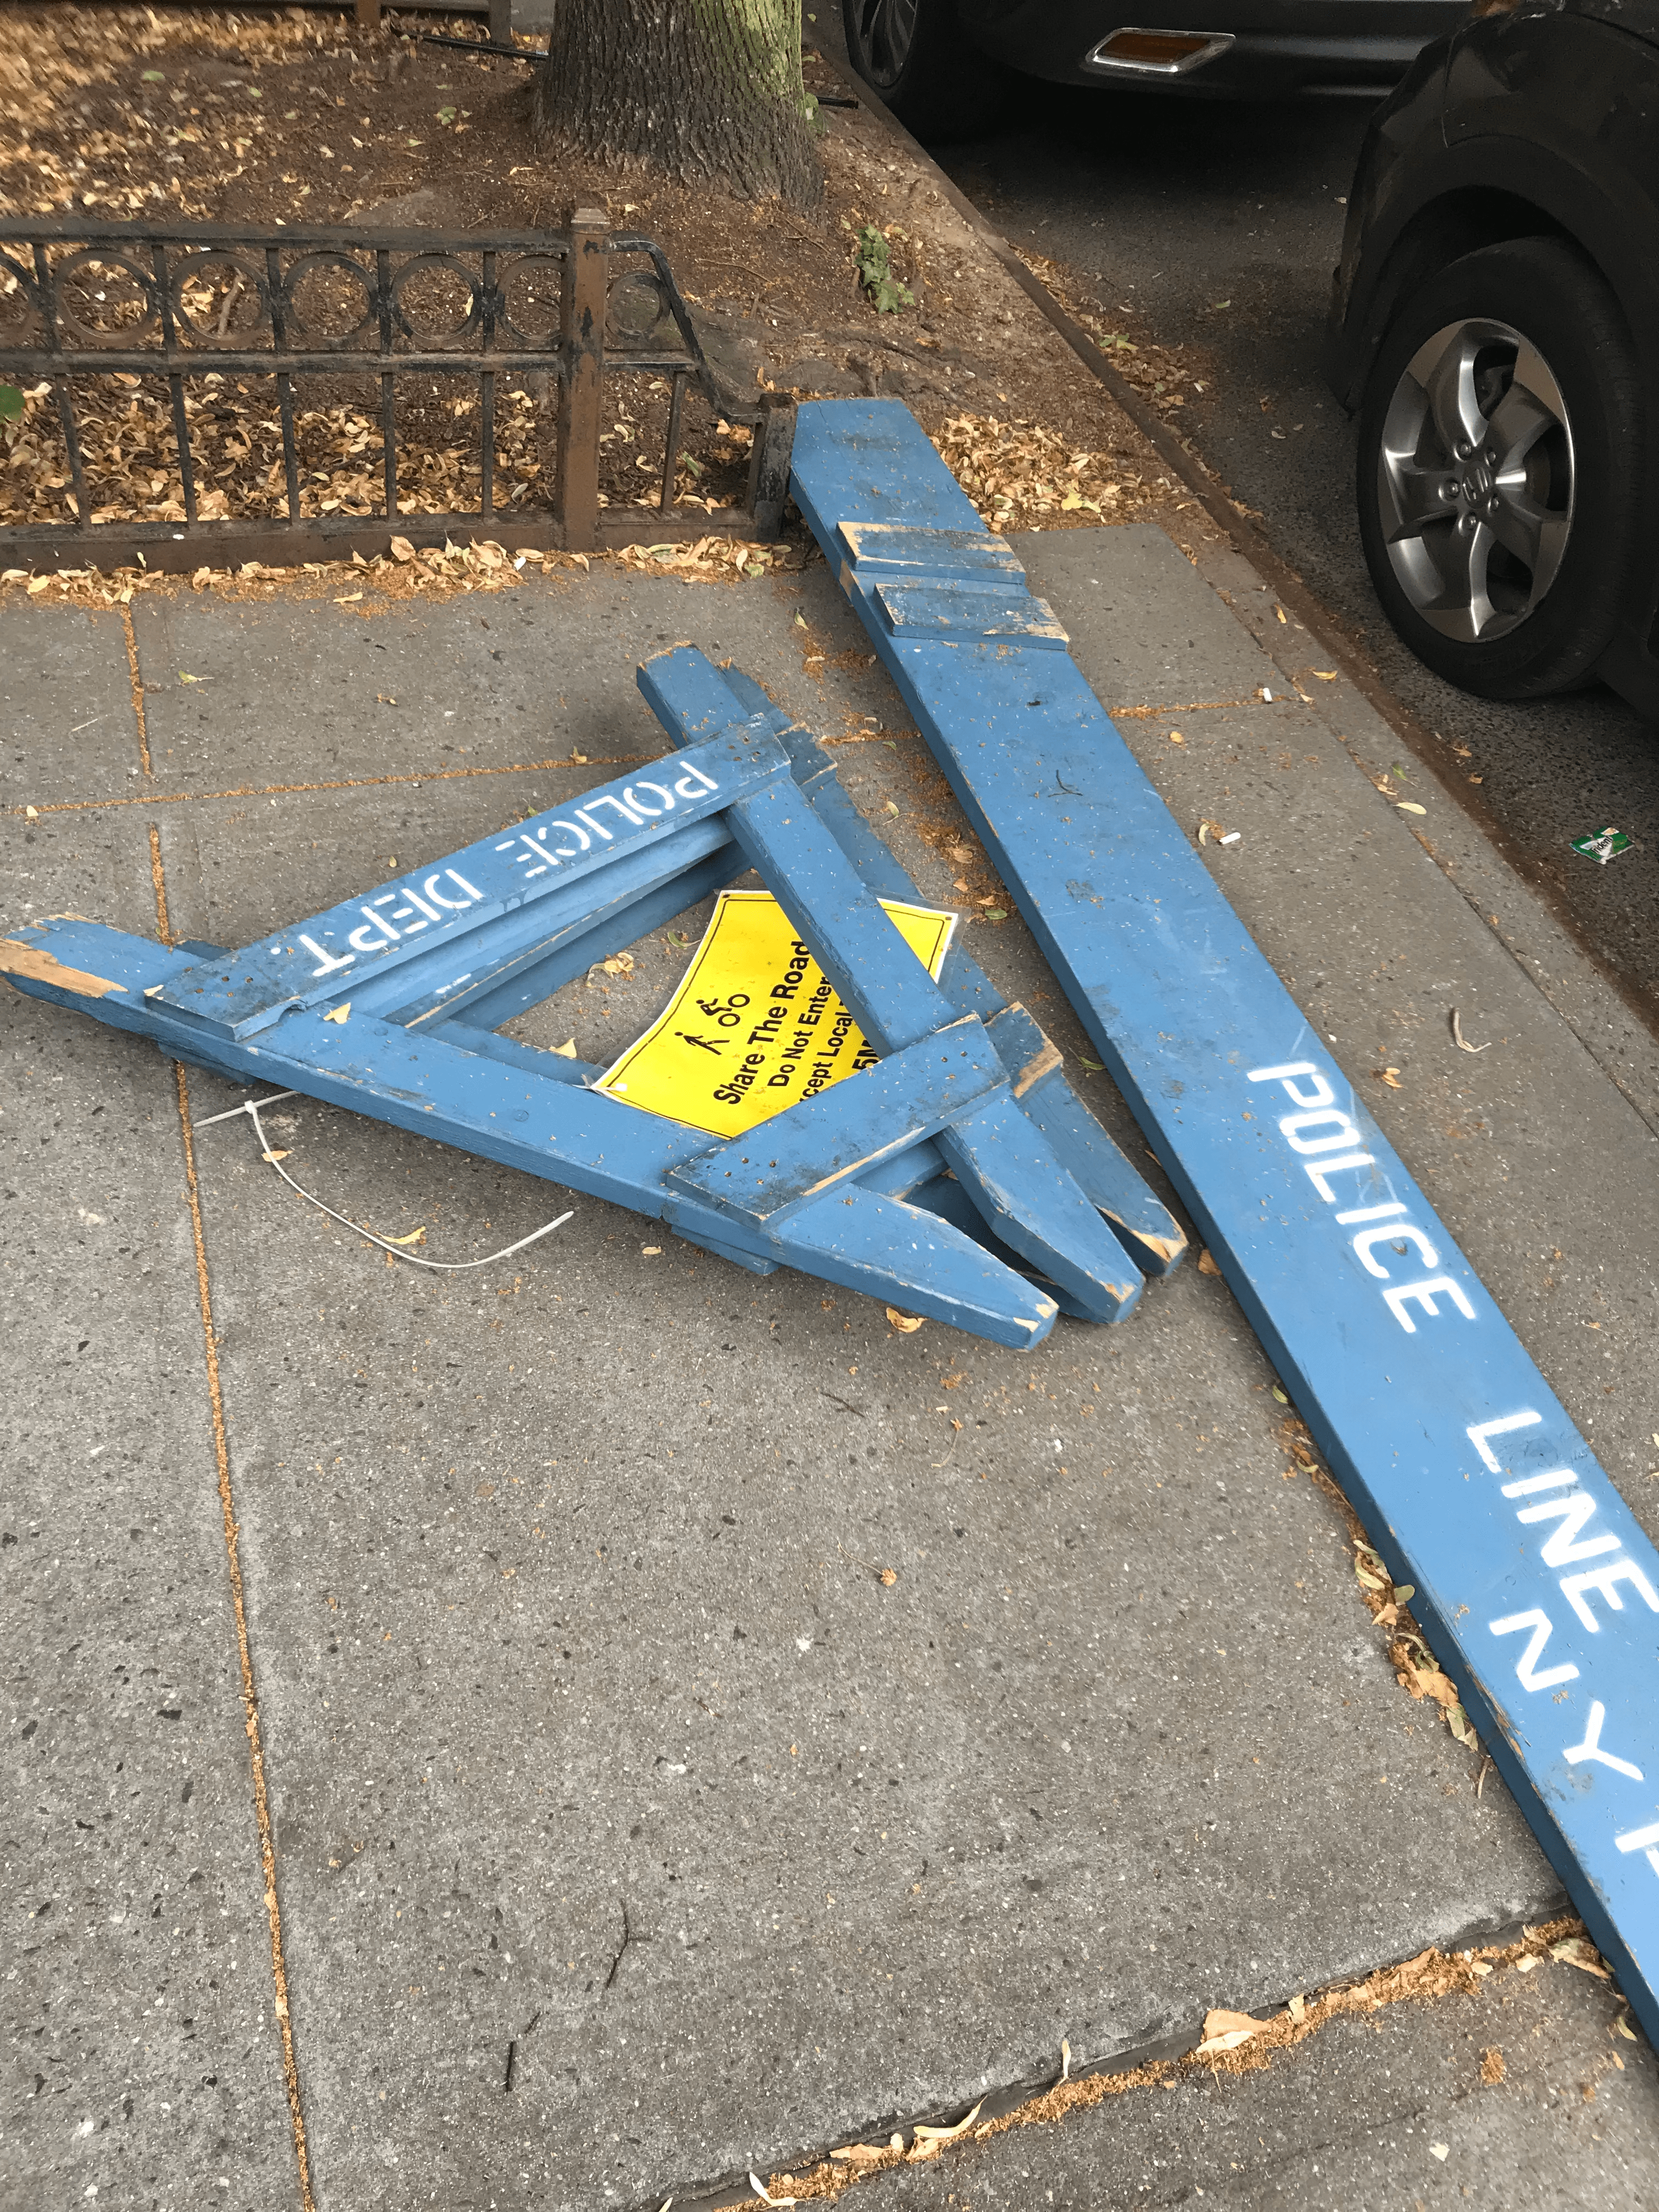 Dismantled barricades on a Brooklyn street